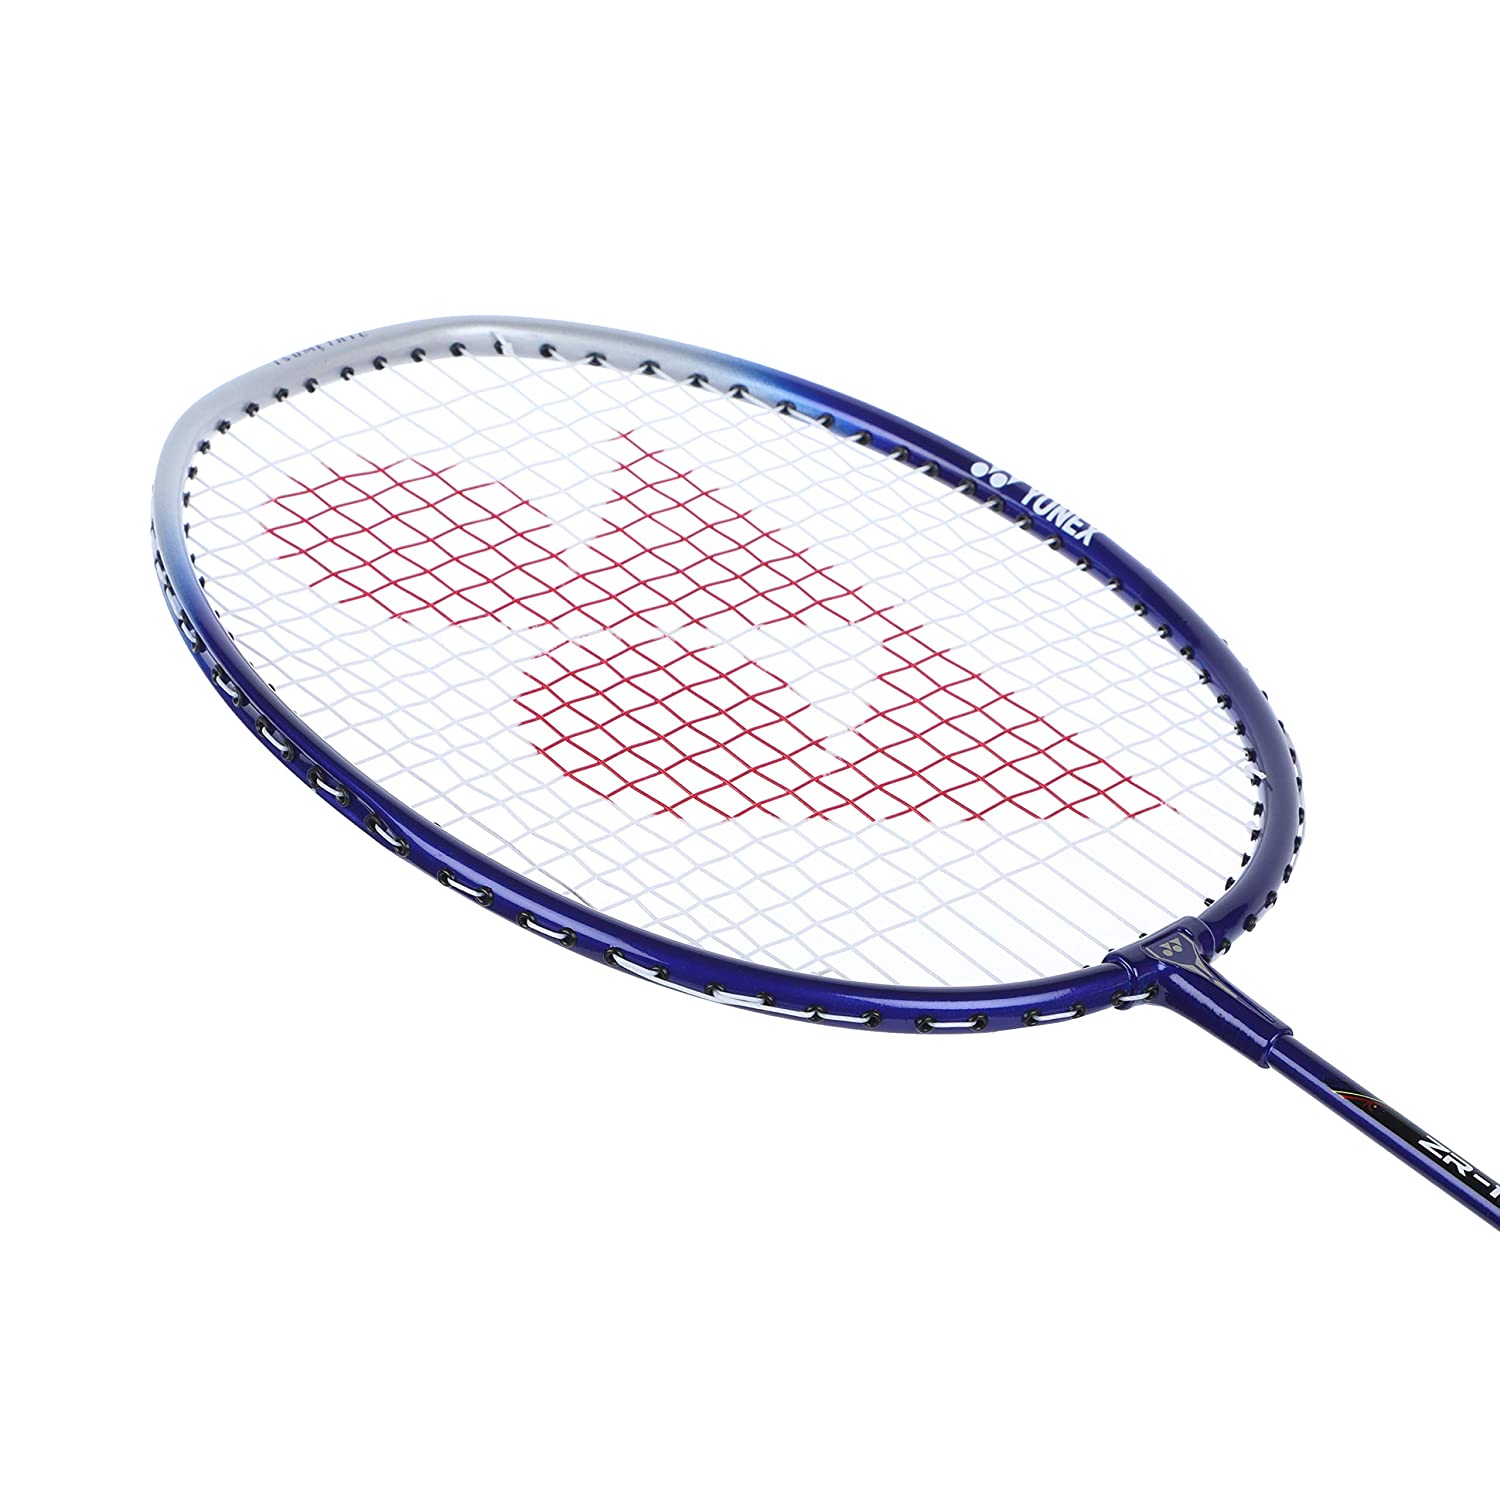 Yonex ZR 101 Aluminium Strung Badminton Racquet with Full Cover (Navy)